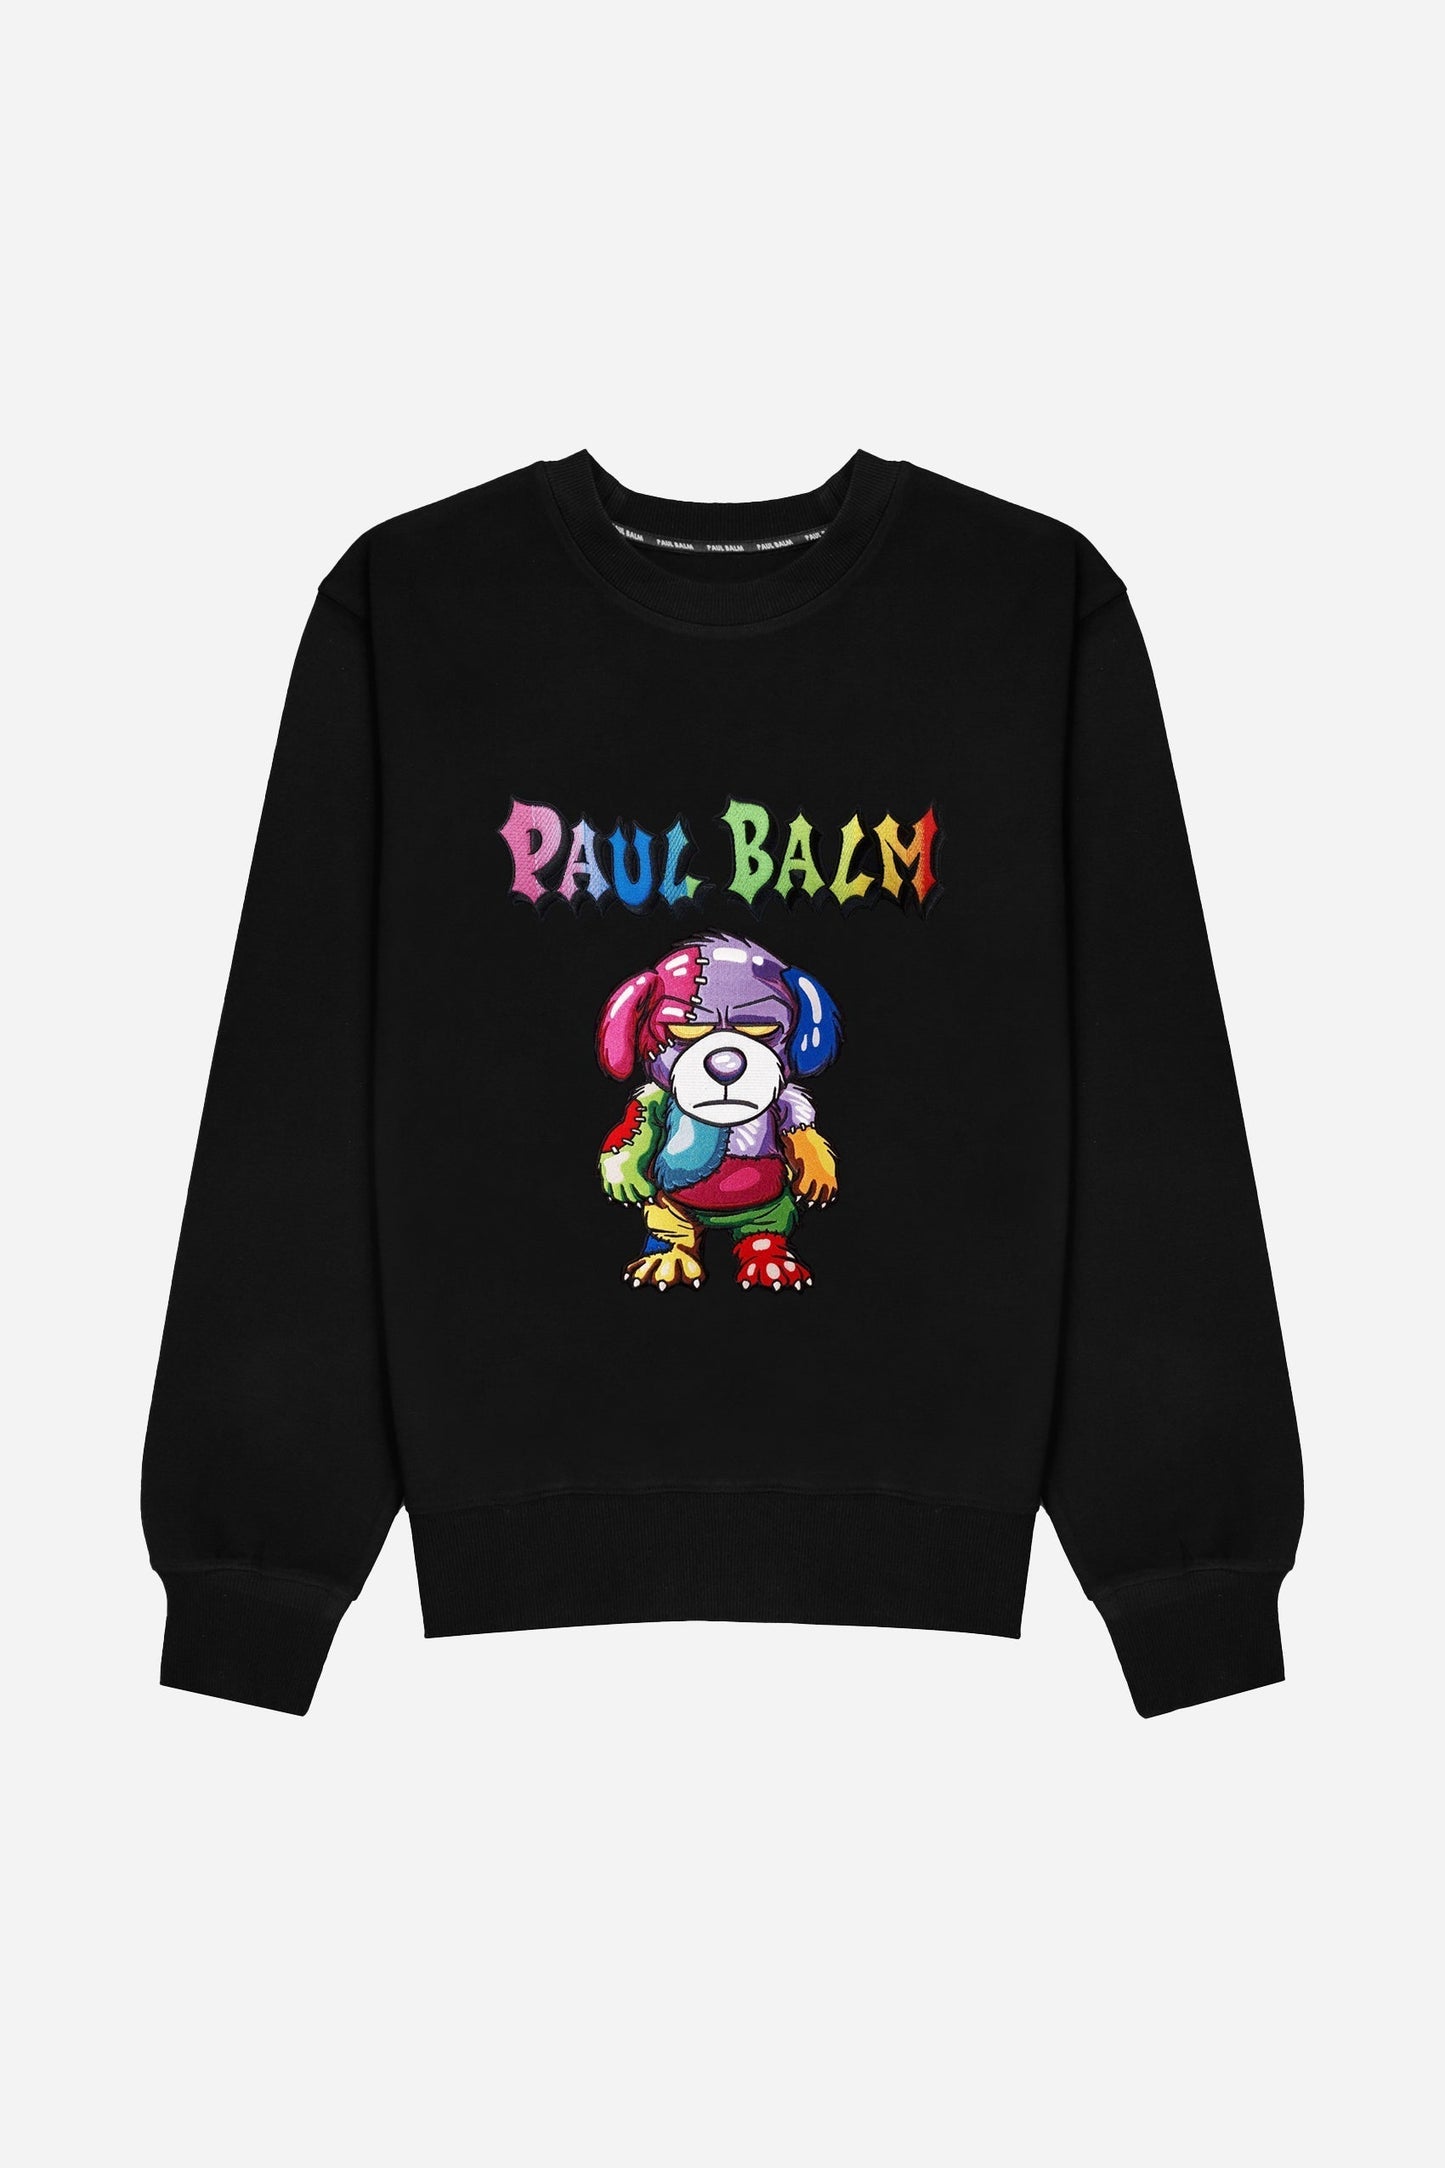 Embroidered Rainbow Teddy Sweatshirt - Limited to 300 - PAUL BALM WORLD